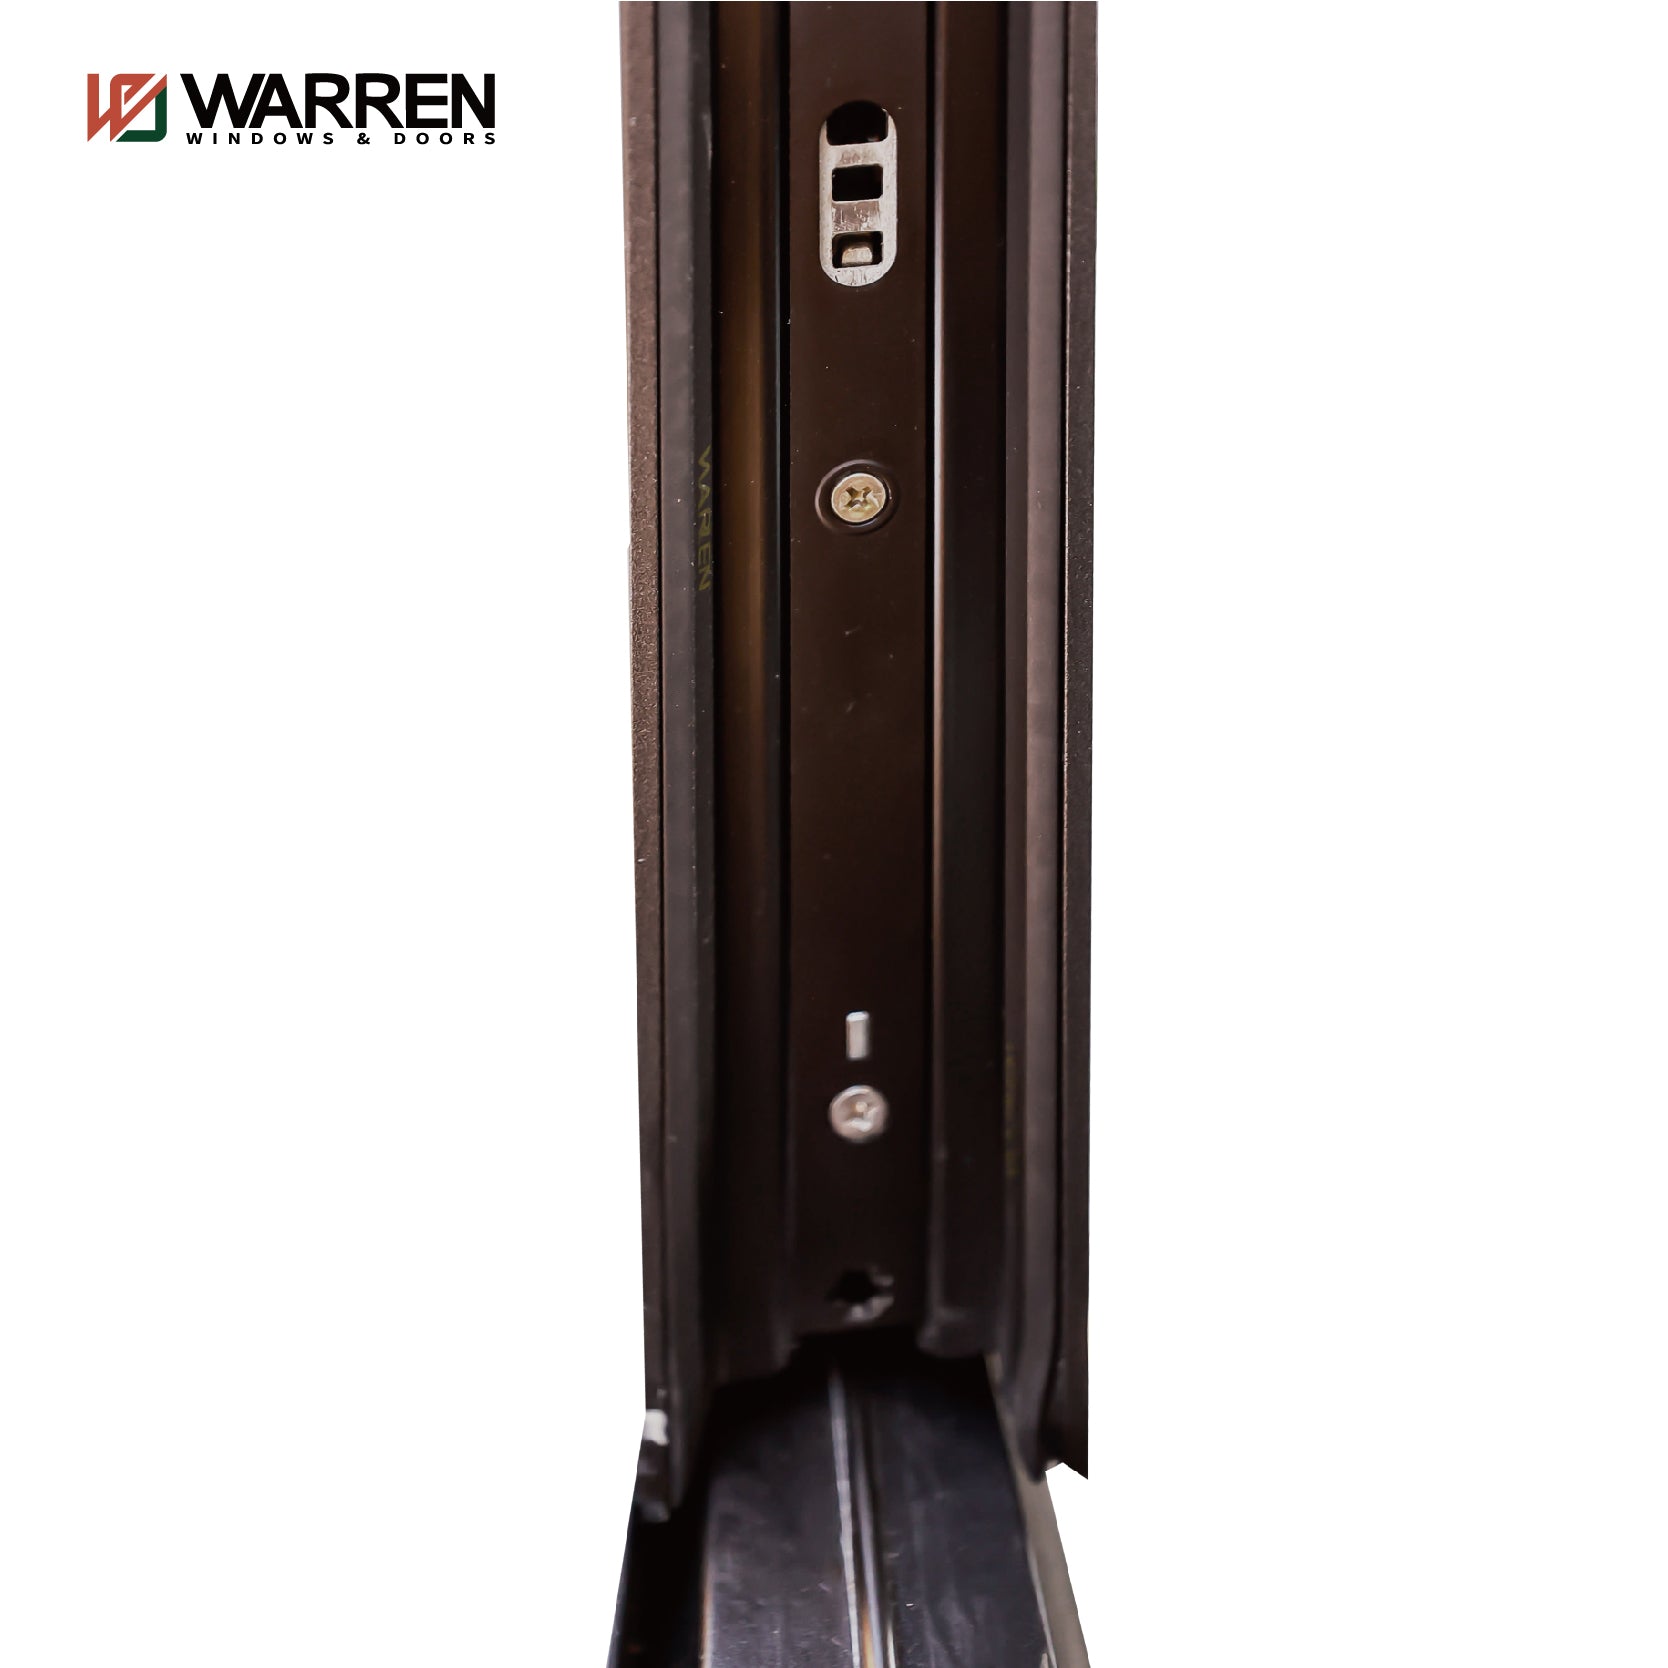 Warren Customized China Doors Doubl Glass Aluminum Slide Door For Business And Home